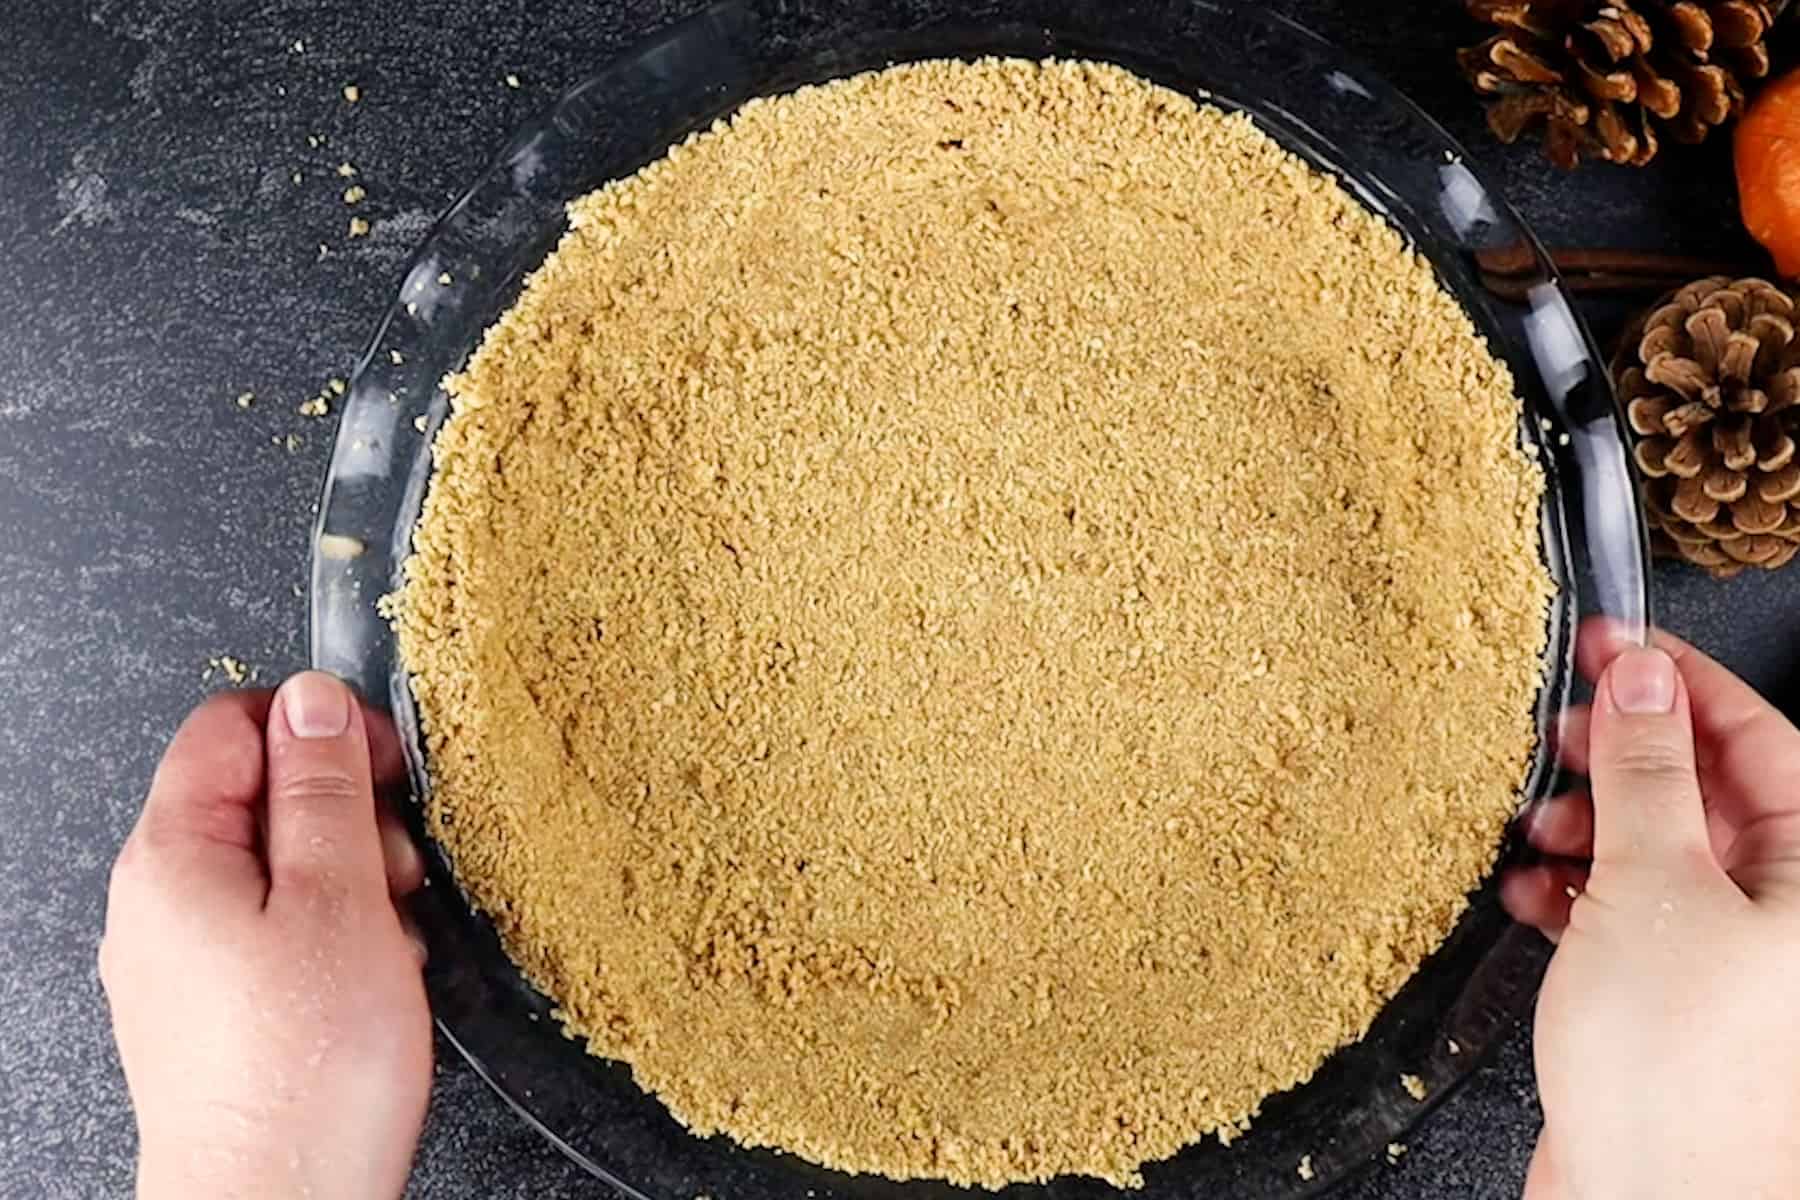 graham cracker crust before baking